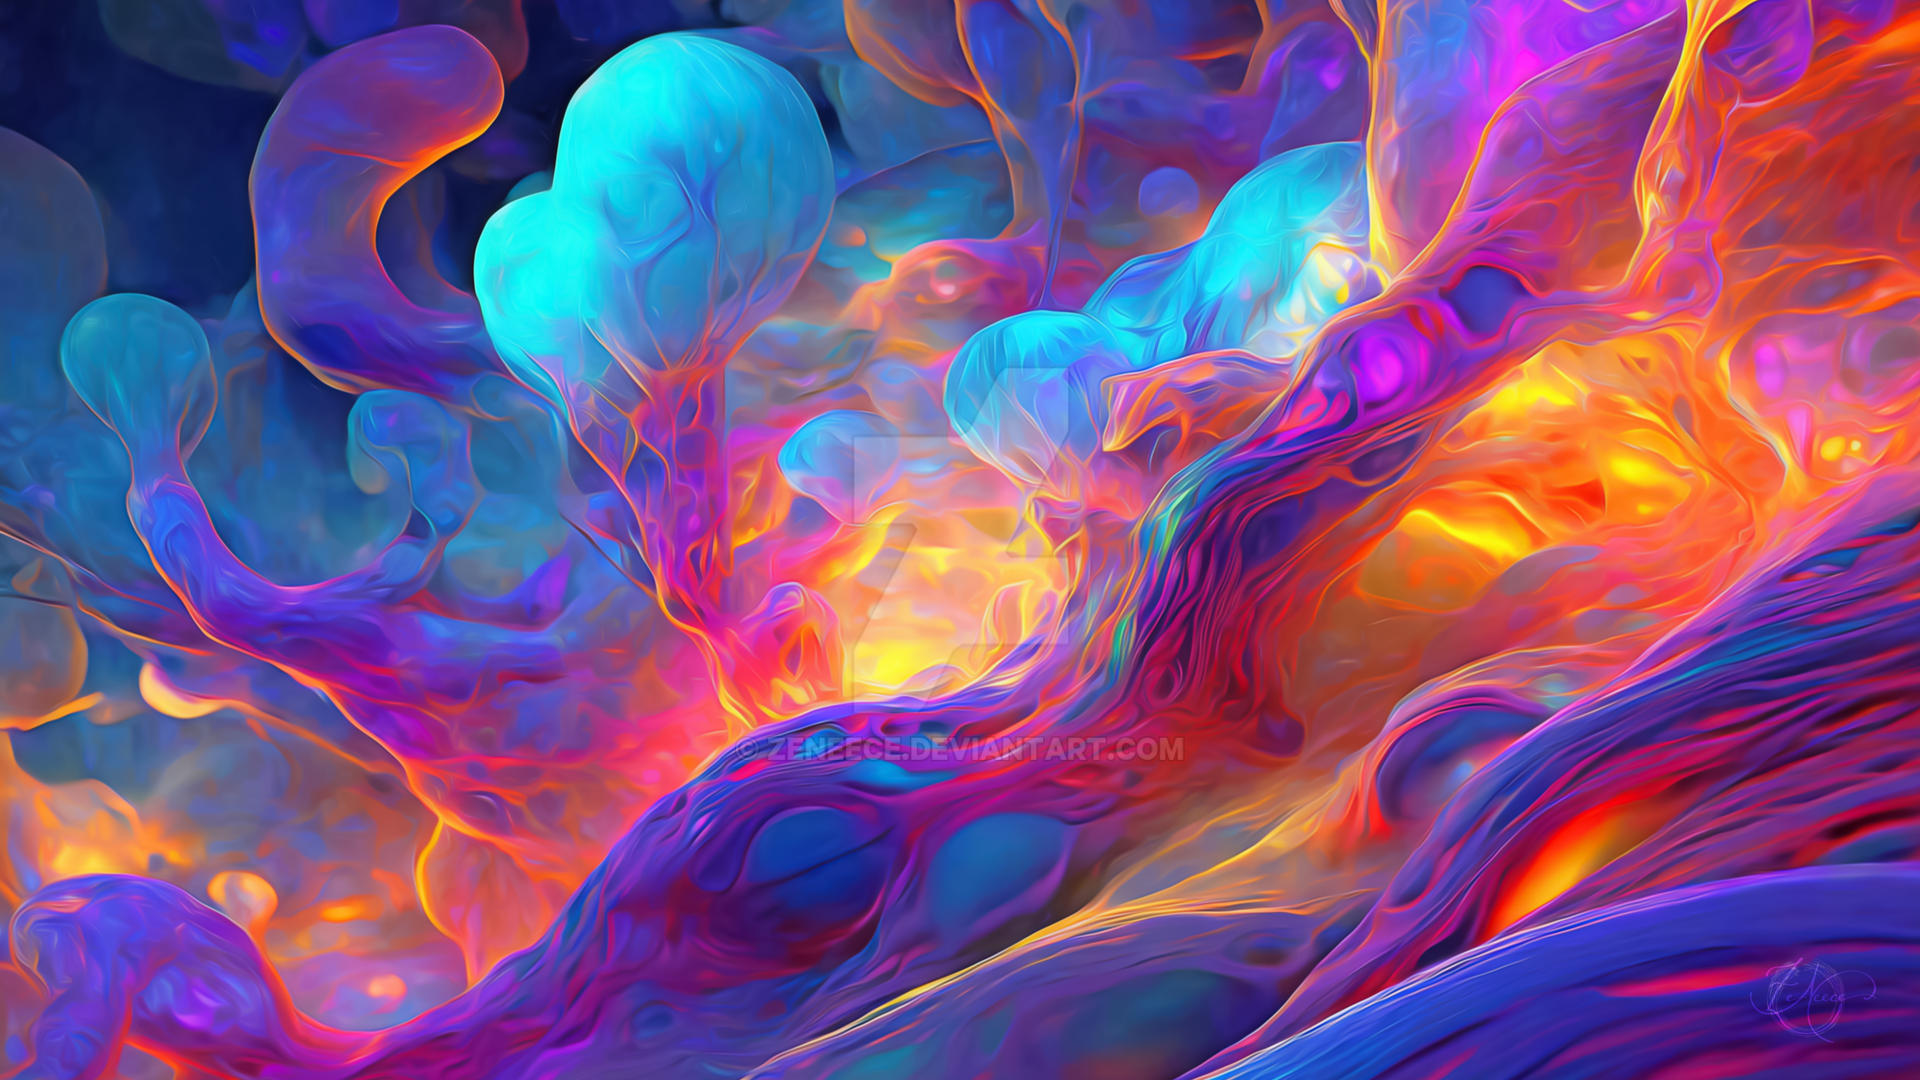 Iridescent Luminous Waves 6 by ZeNeece on DeviantArt